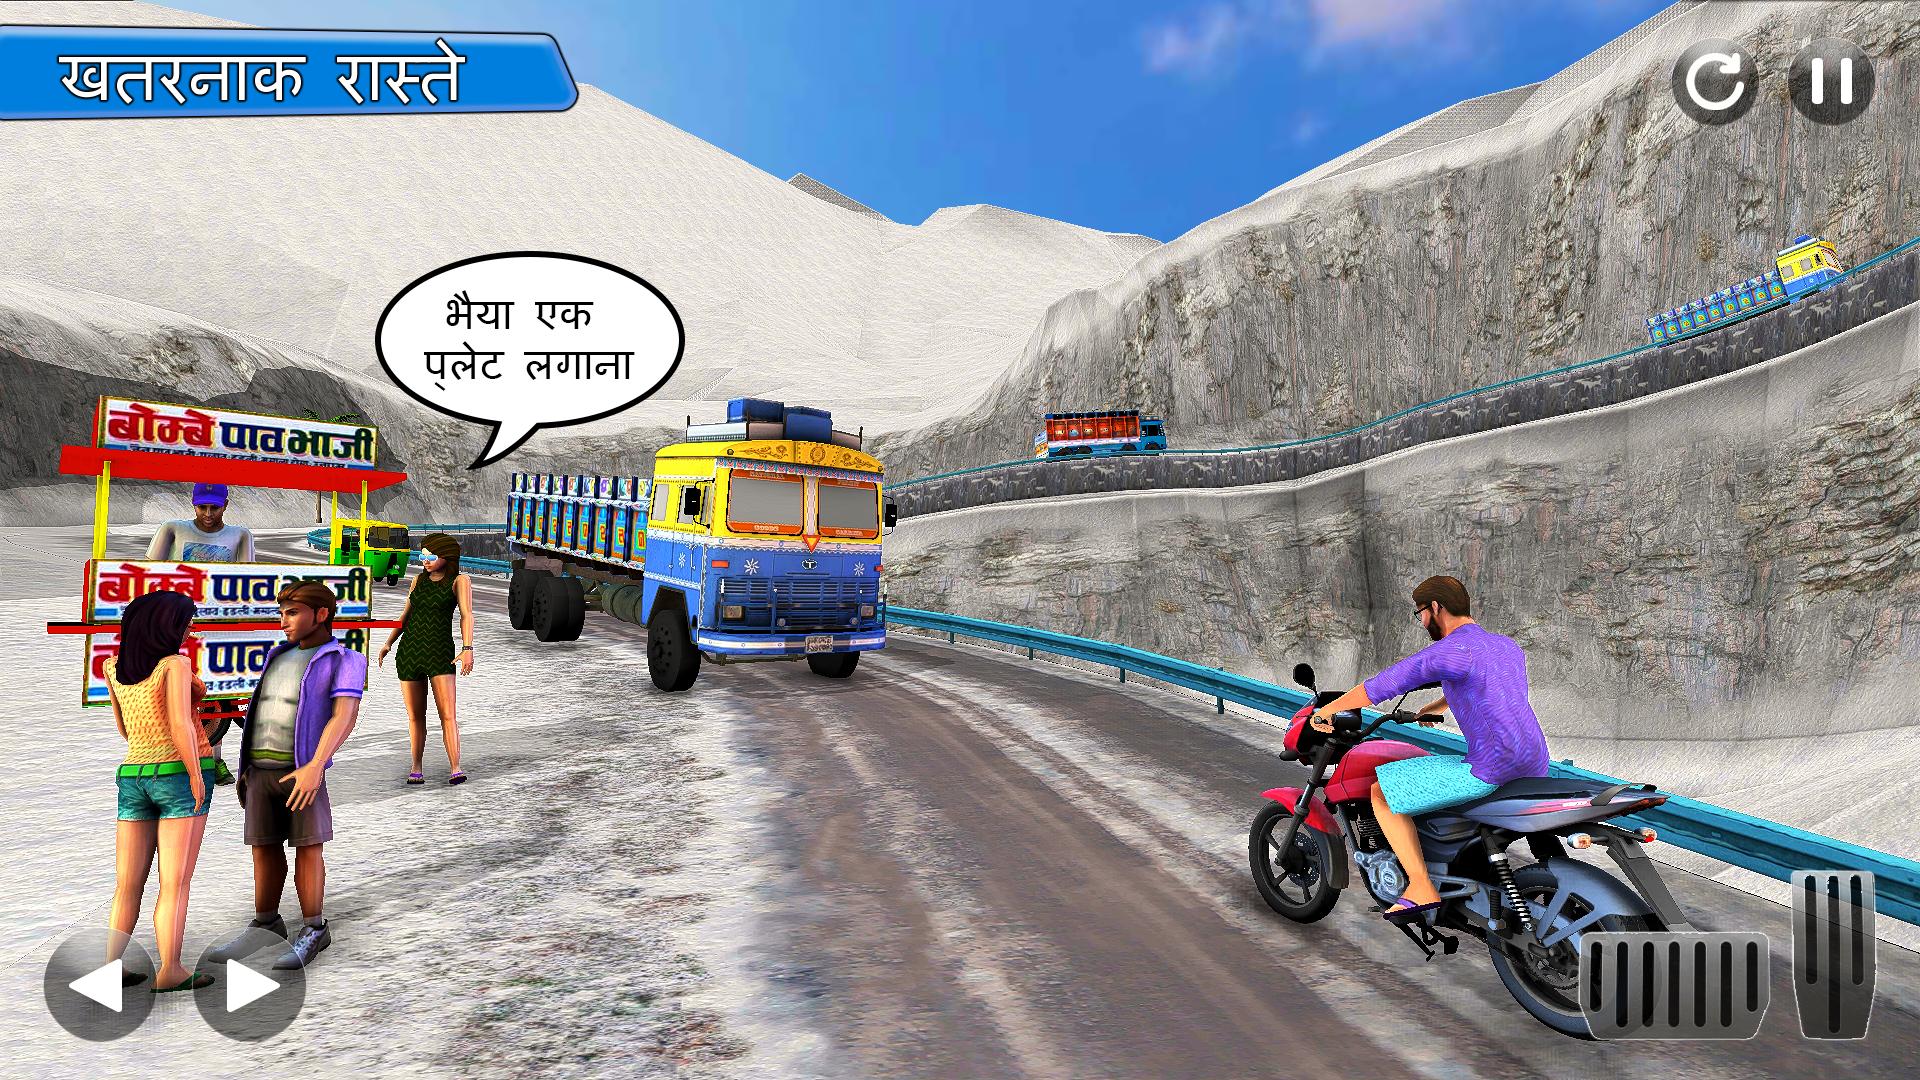 Bike Rider Gadi wala 3D Games für Android - Screen 3.jpg?fakeurl=1&type=